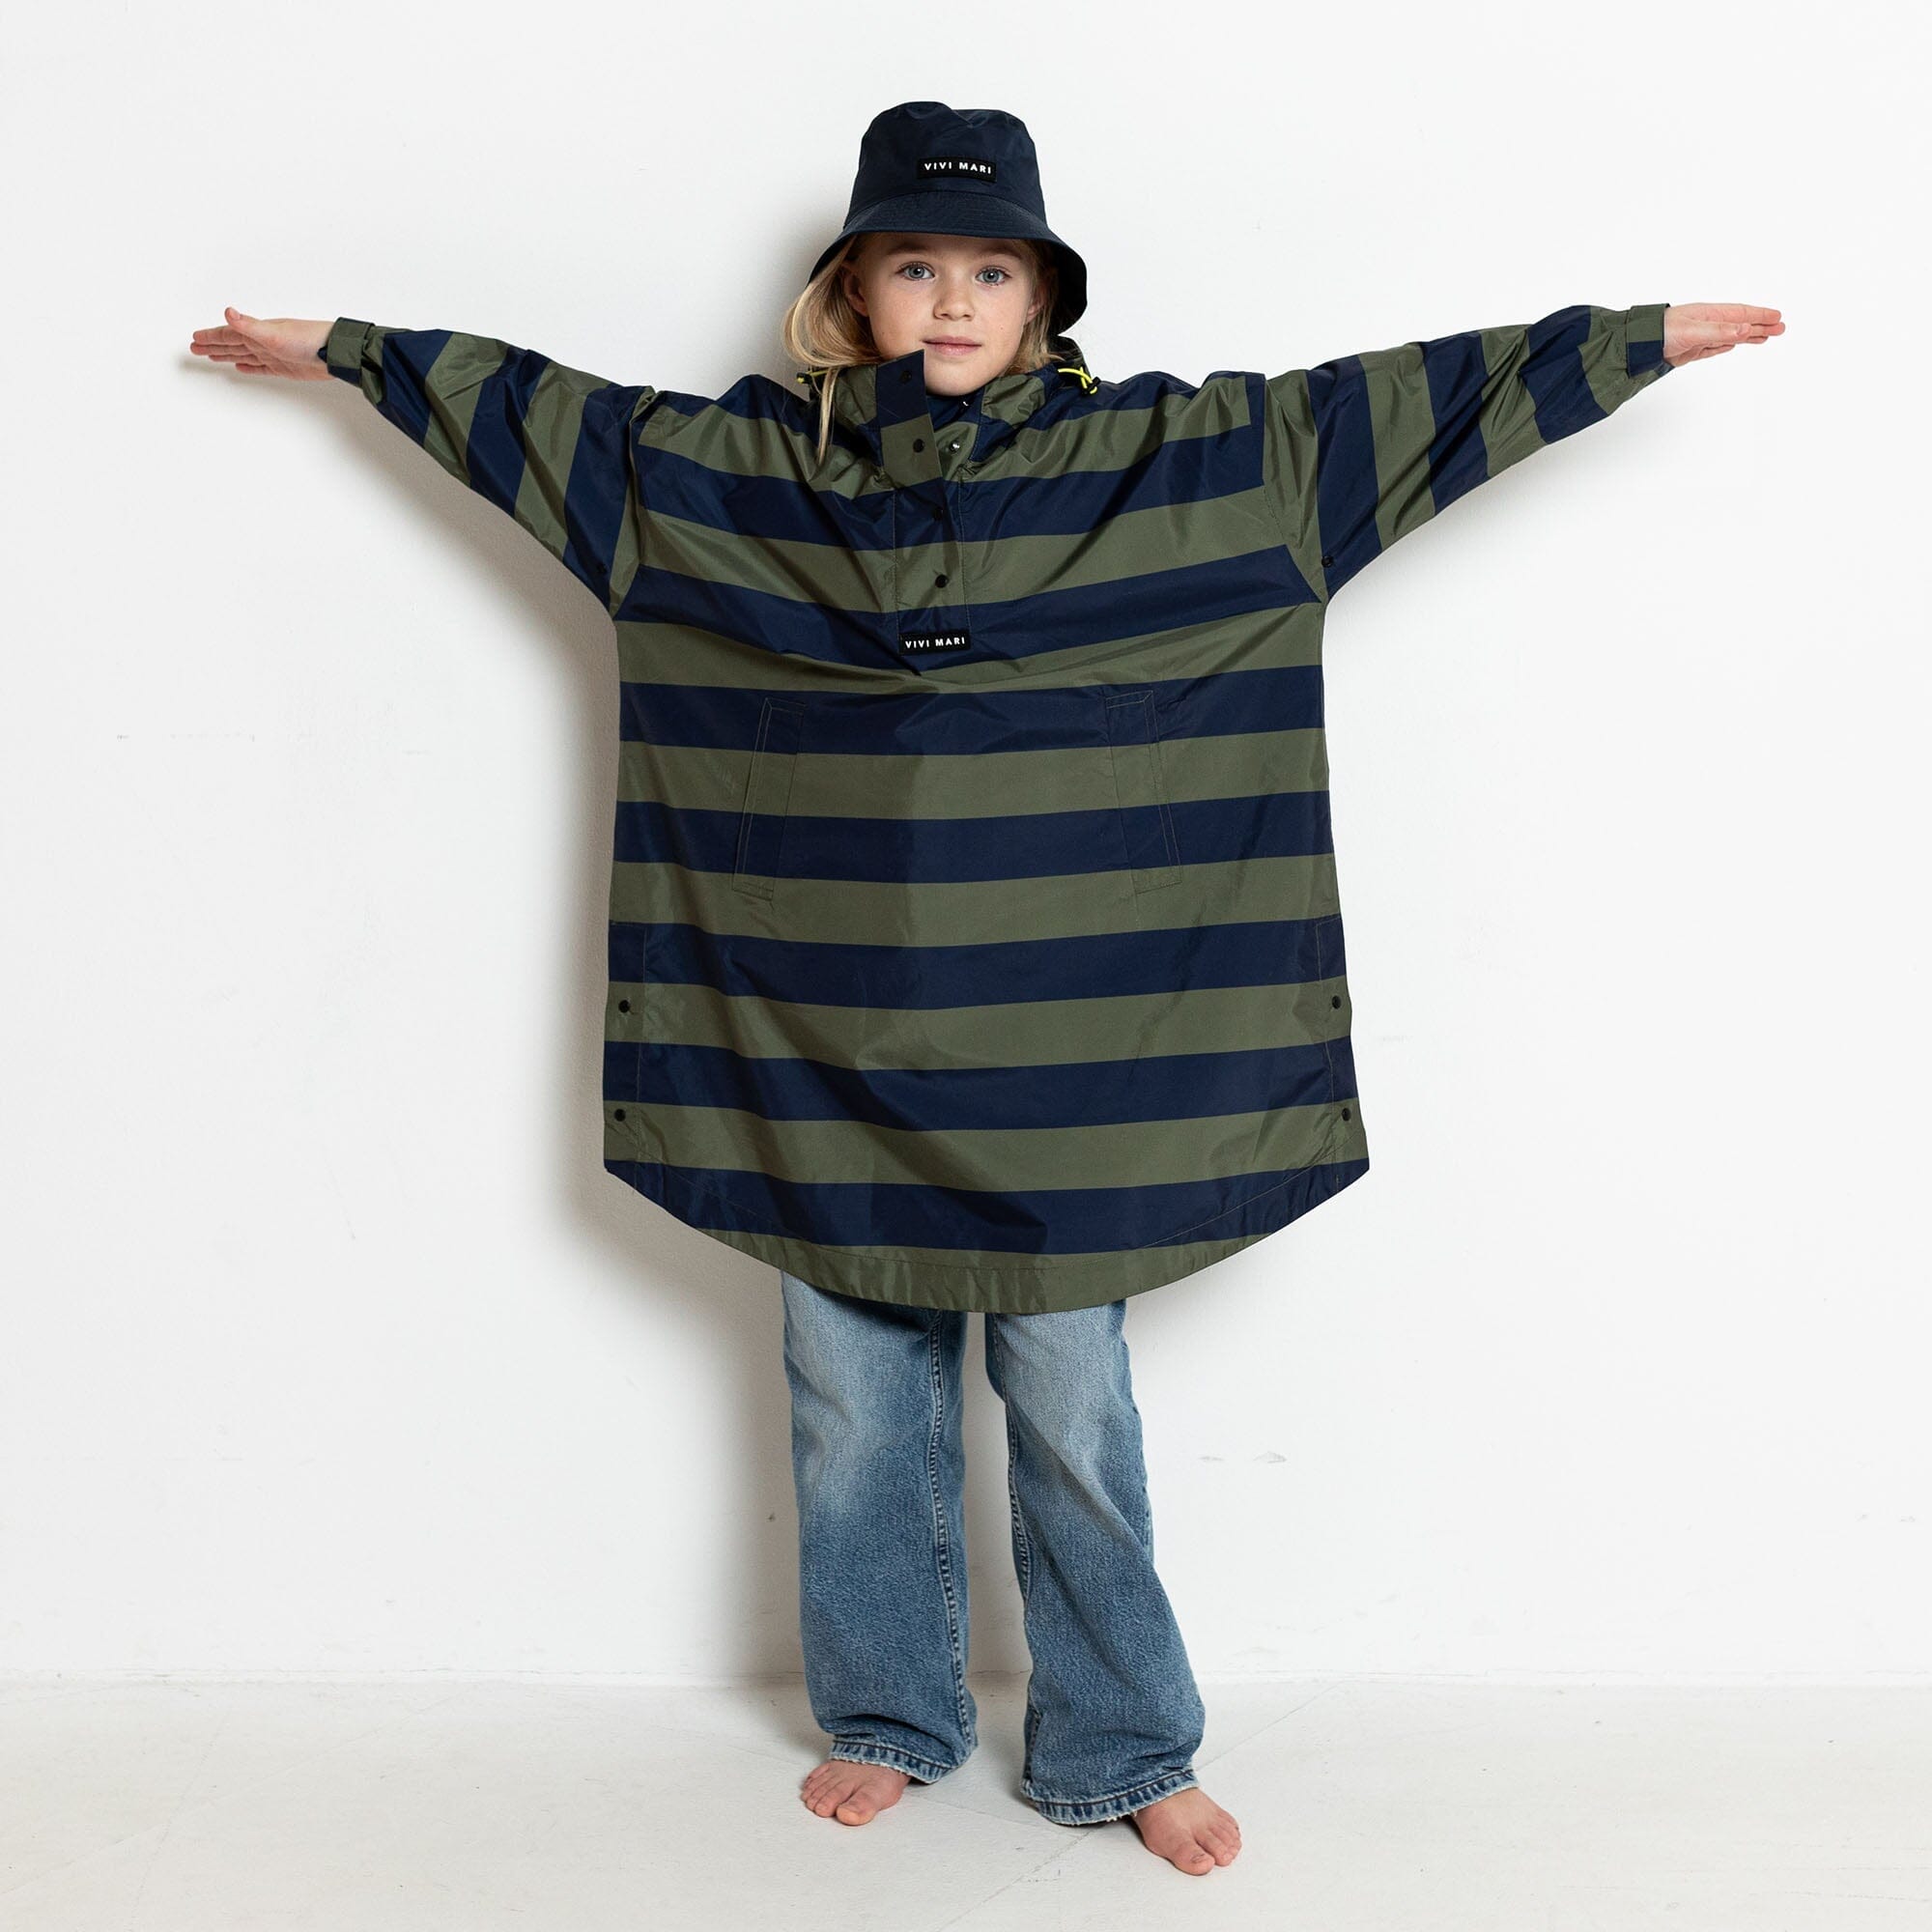 Regencape Poncho Kids "Stripes" Bekleidung & Accessoires Vivi Mari Navy/Olive 7-9 J 